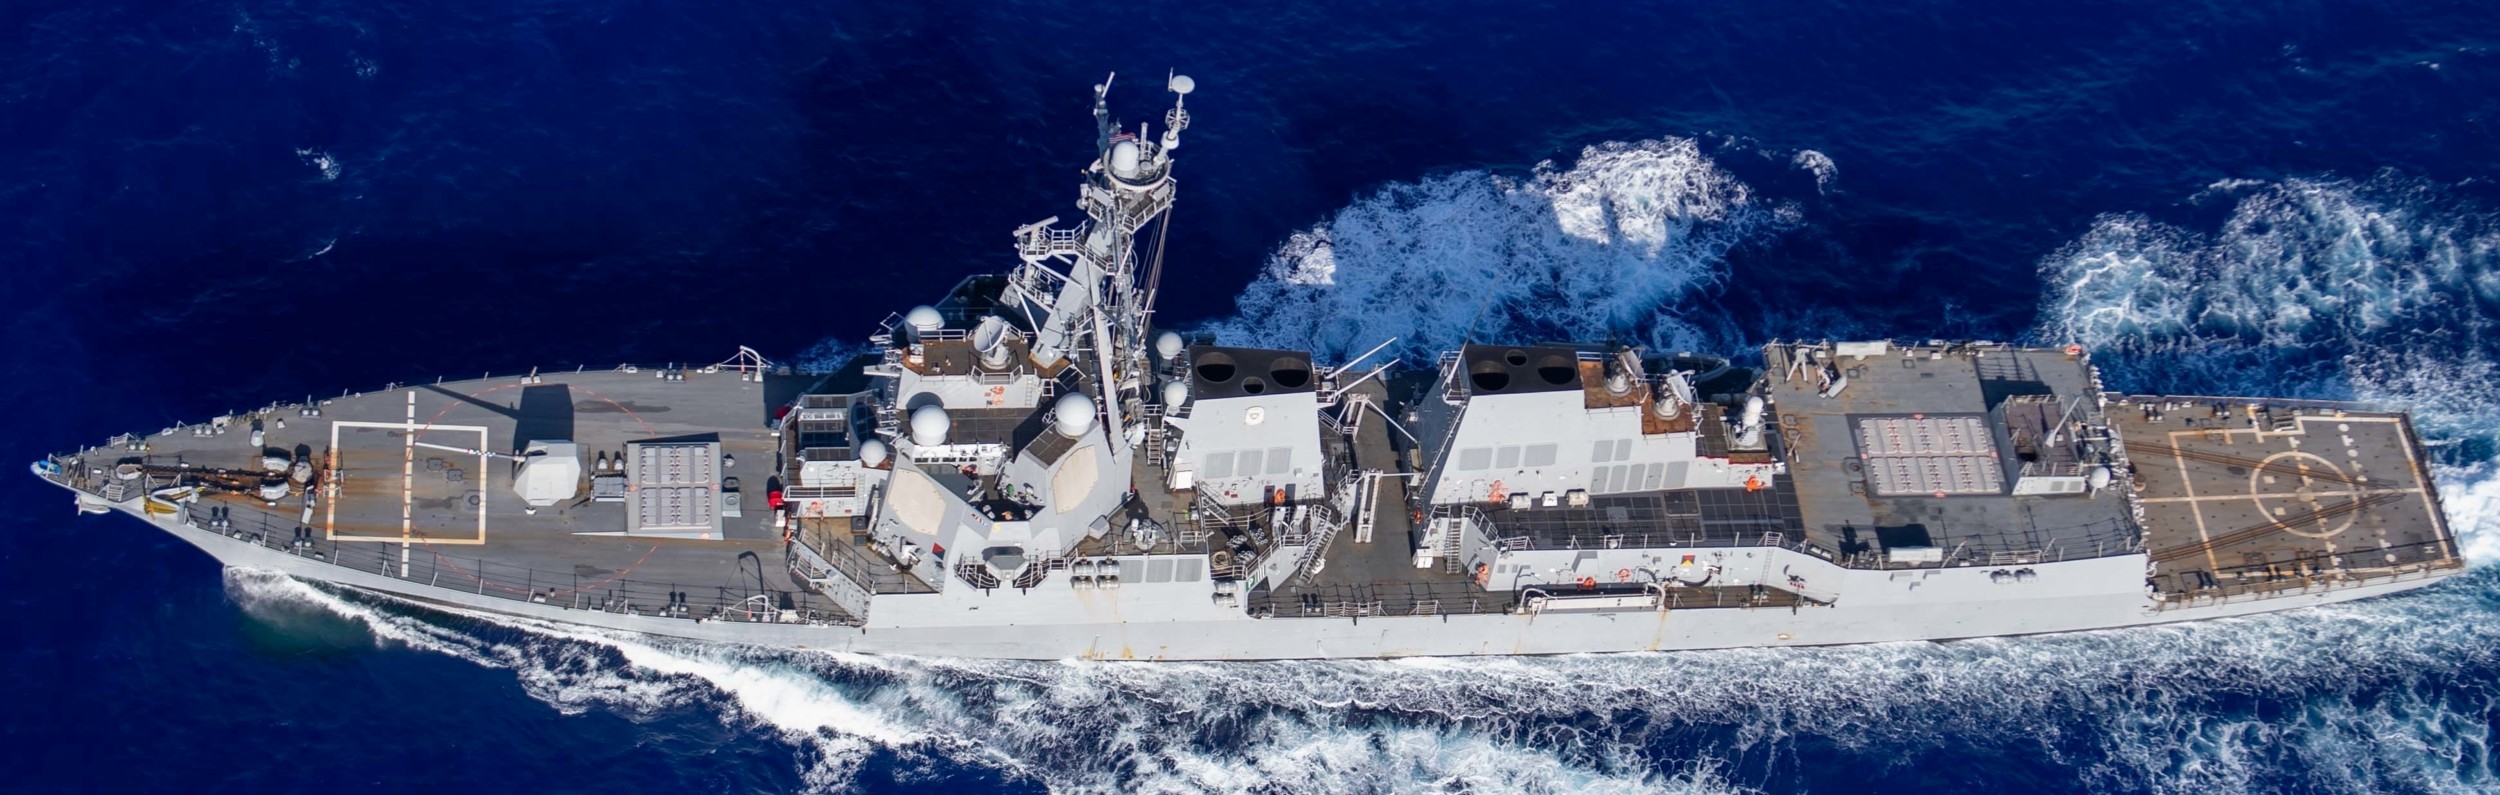 ddg-107 uss gravely arleigh burke class guided missile destroyer aegis us navy atlantic ocean 47